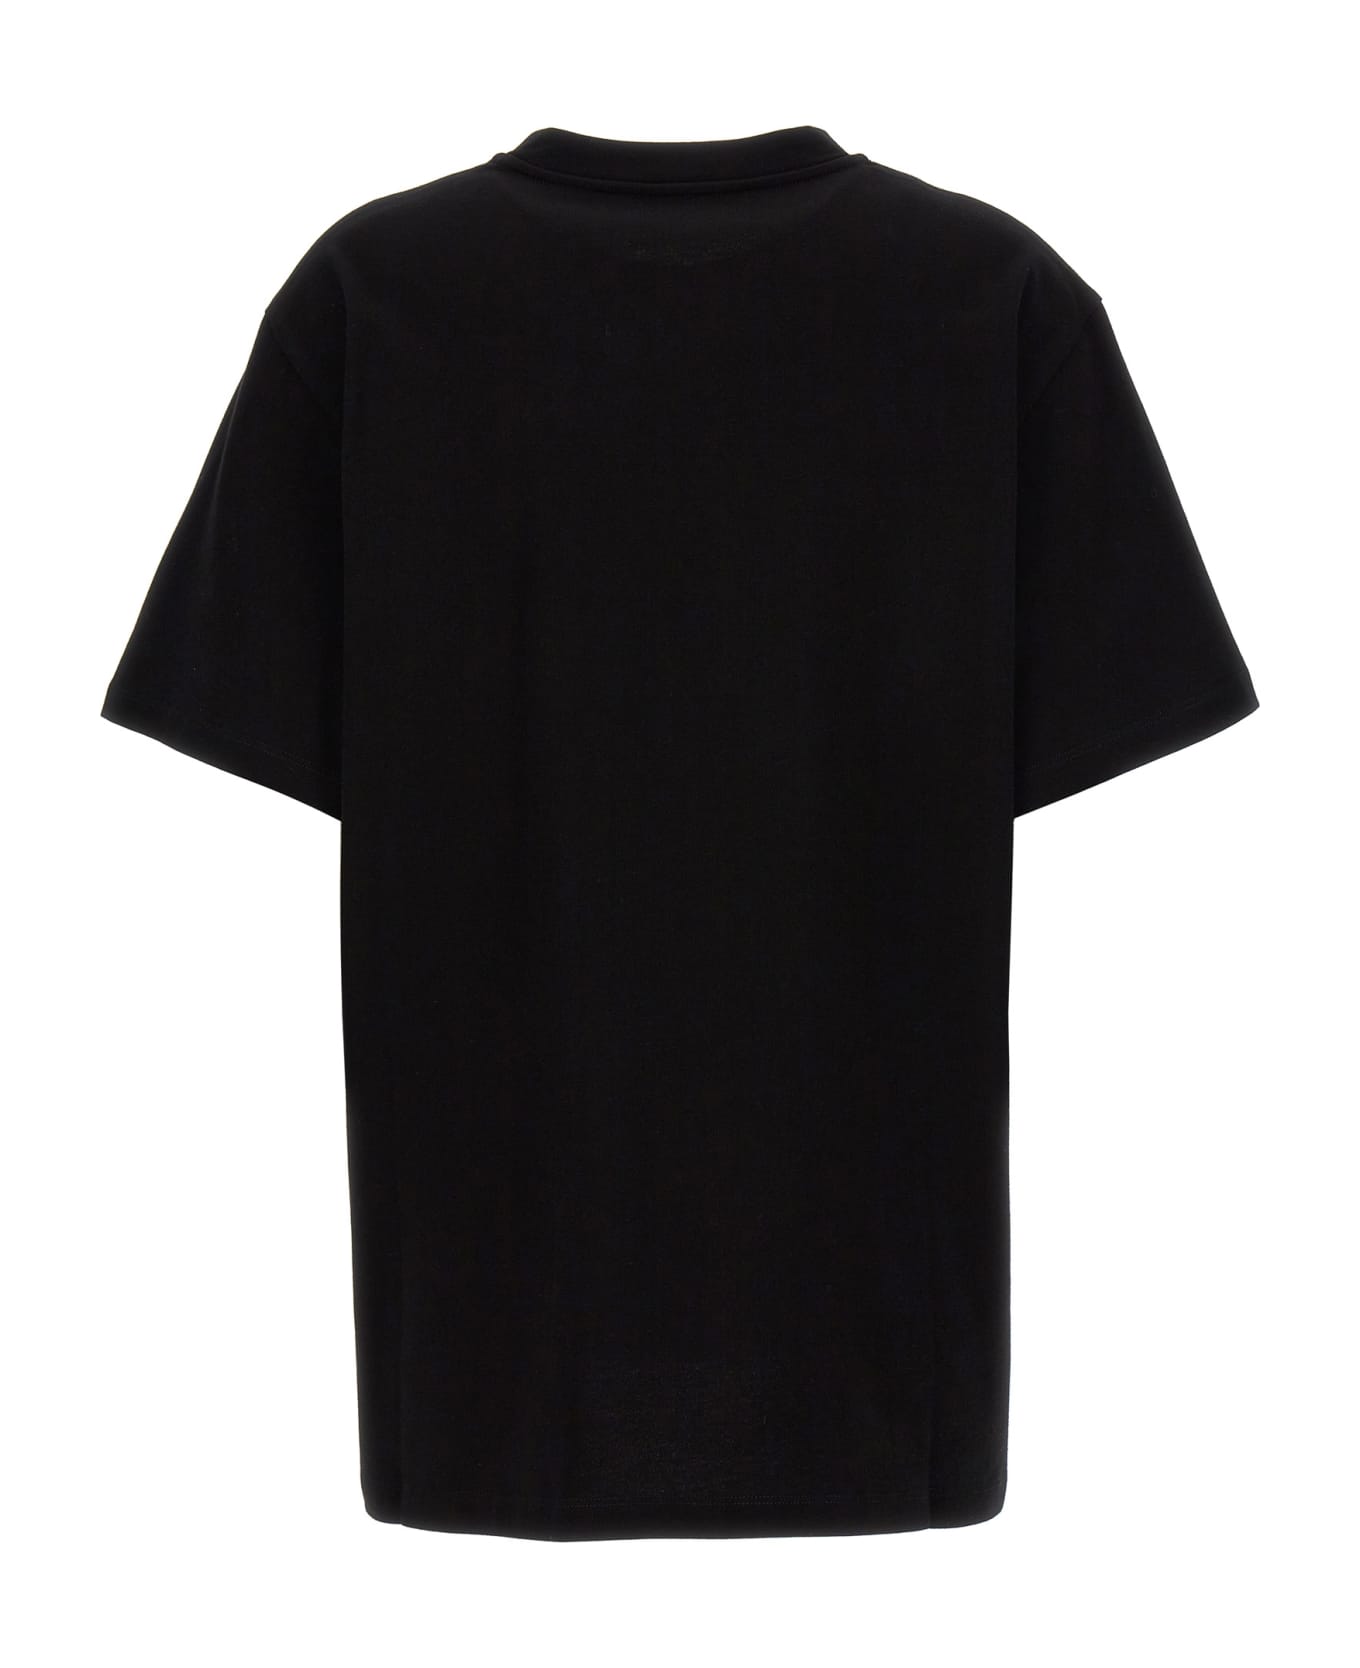 Stella McCartney 'iconic' T-shirt - Black Tシャツ